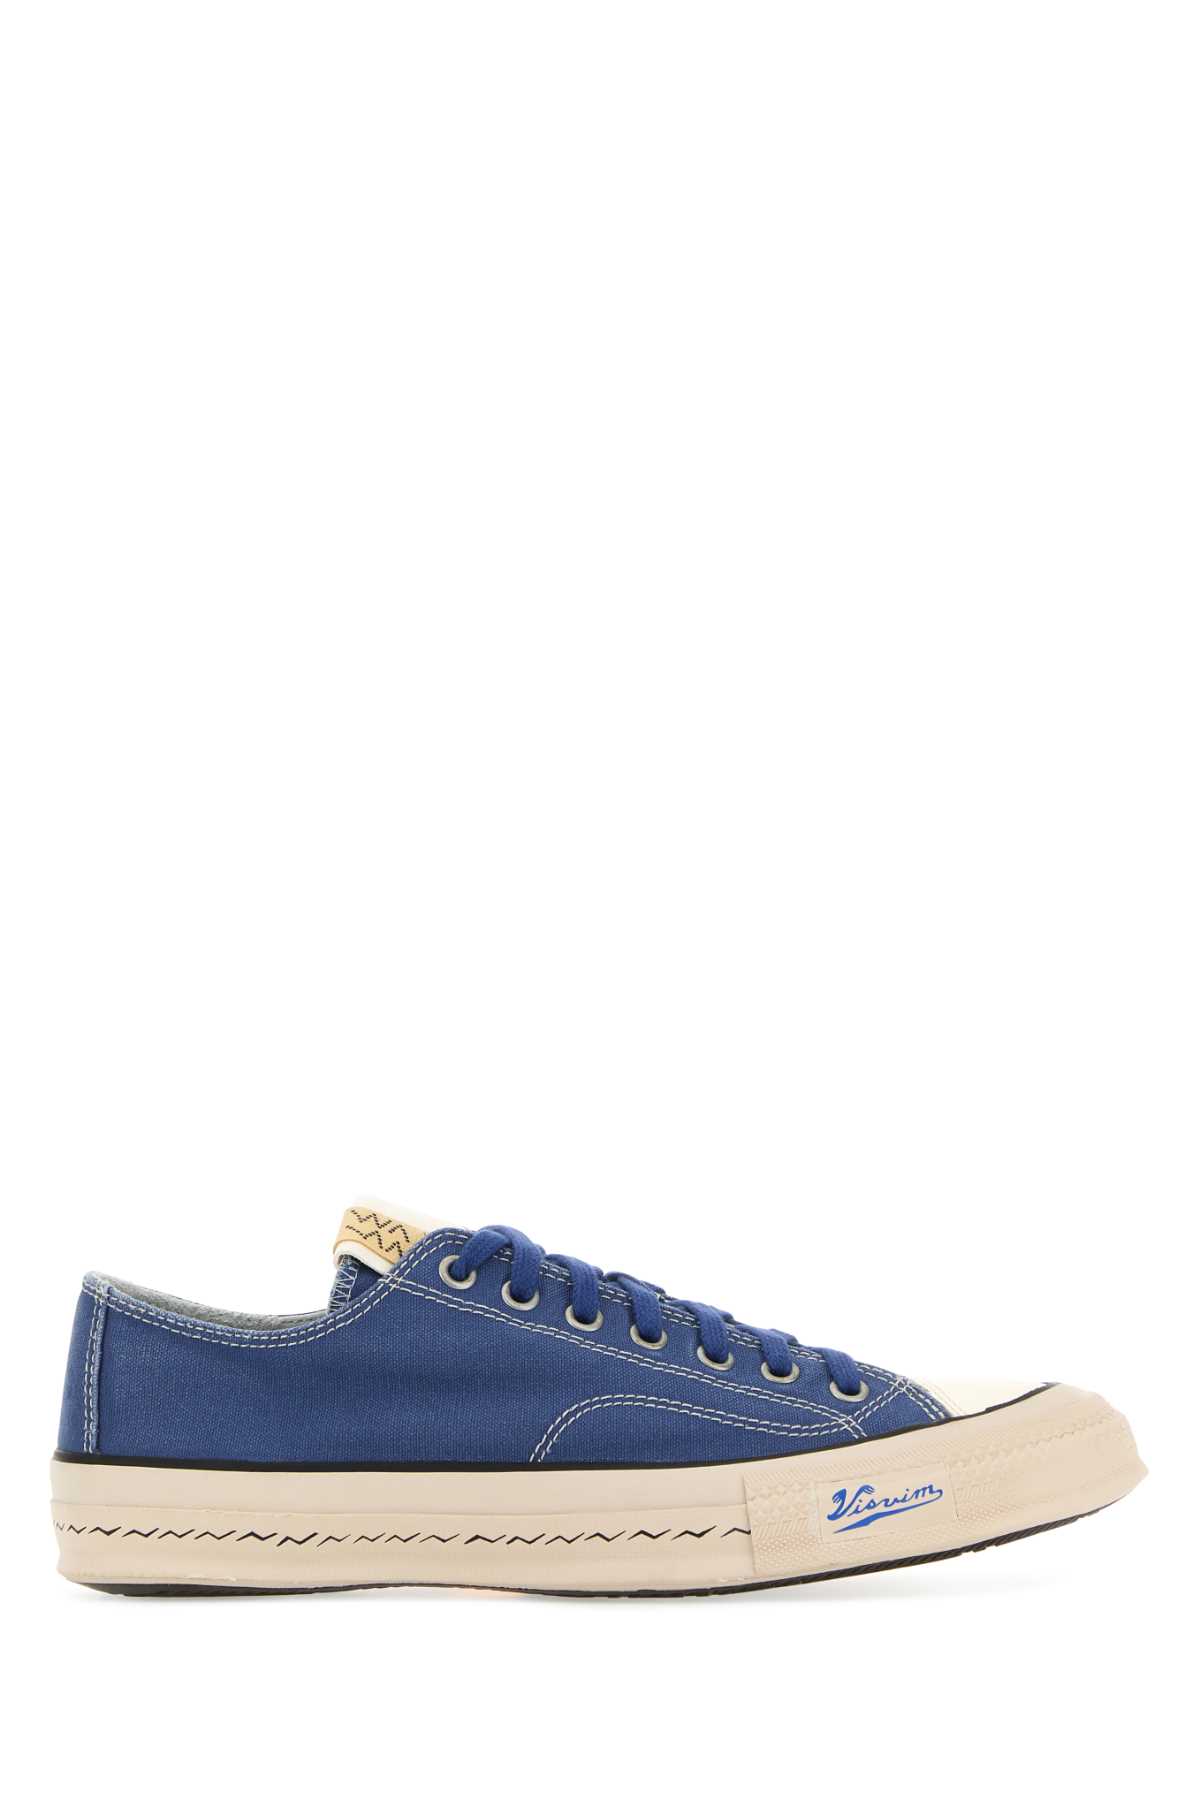 Shop Visvim Blue Canvas Skagway Sneakers